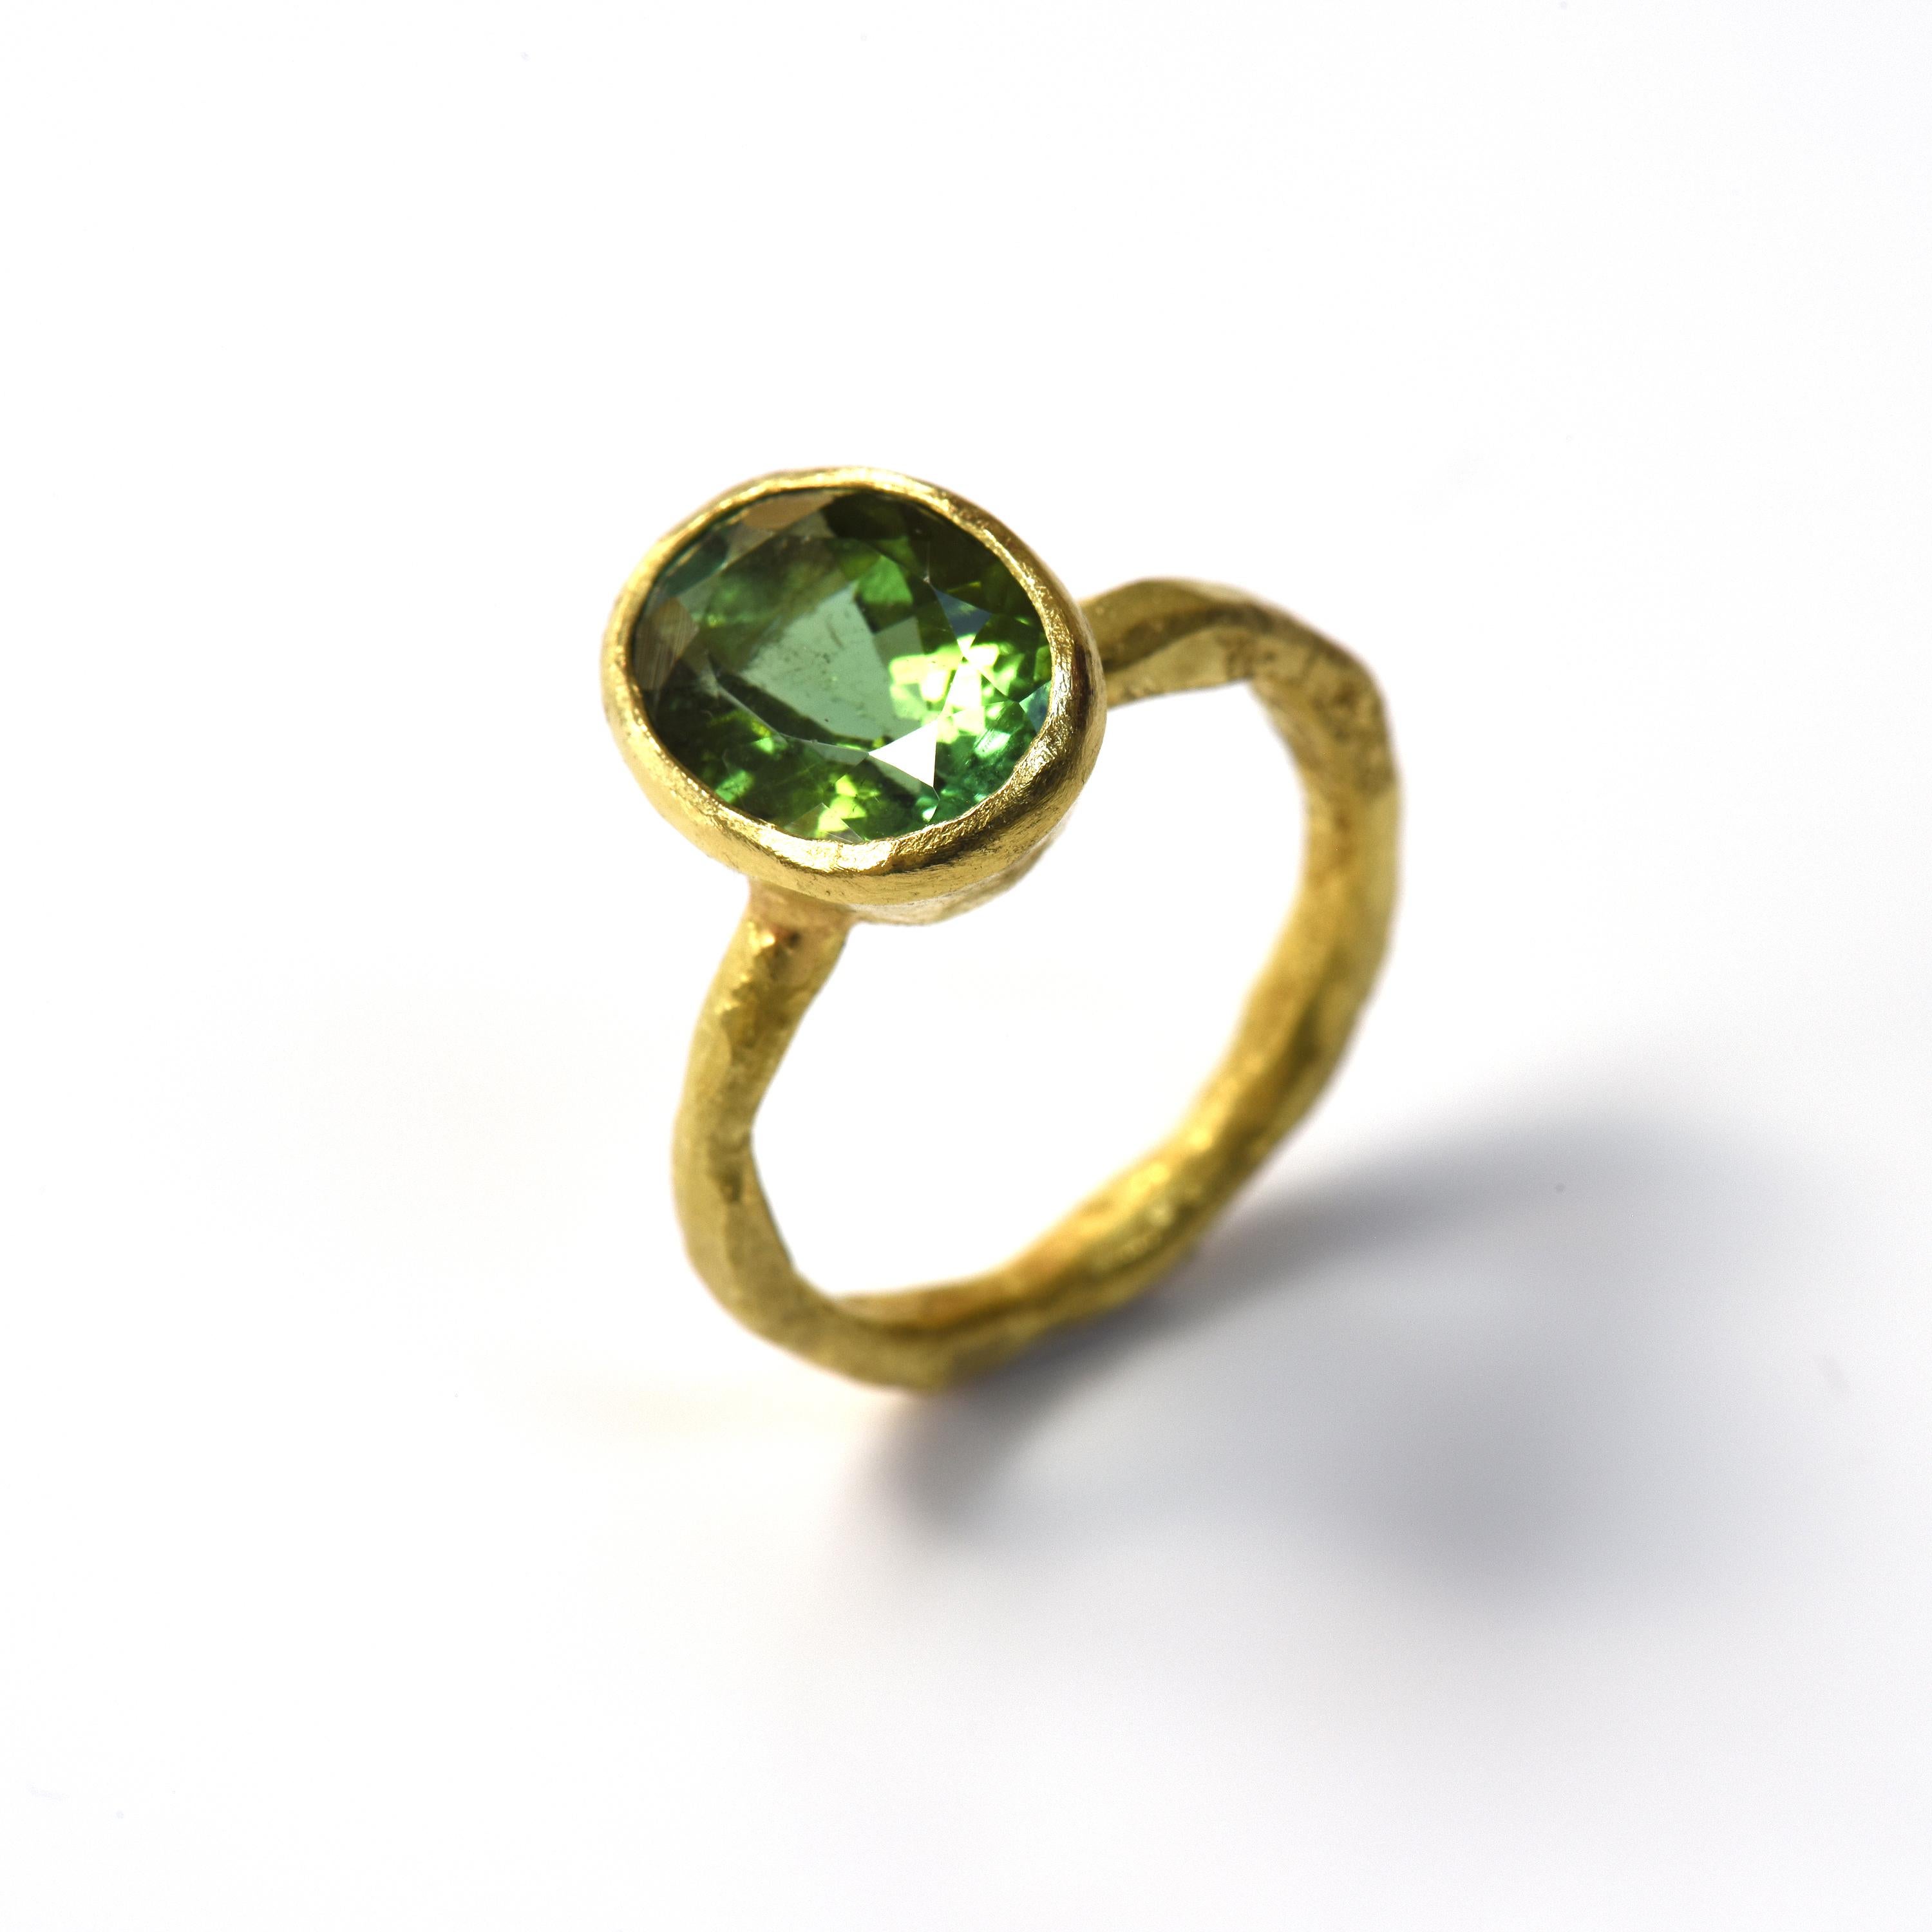 Oval Cut Oval Green Tourmaline 18 Karat Gold Textured Ring by Disa Allsopp